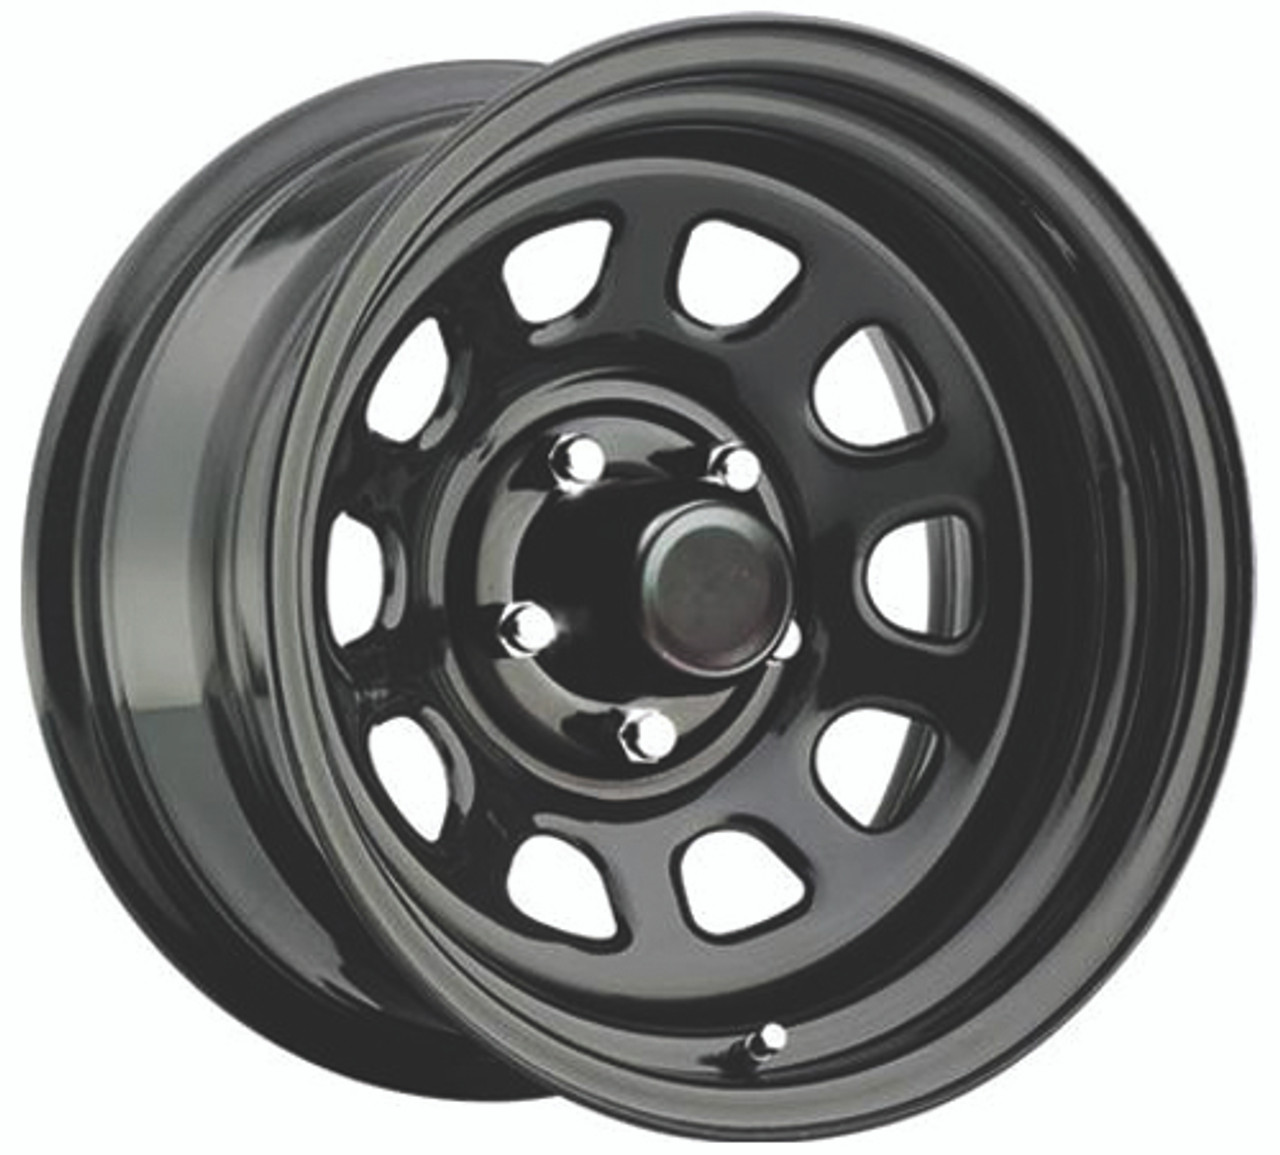 Pro Comp Steel Wheelss Series 51 Wheels 15x10 5x4.5 Black ...